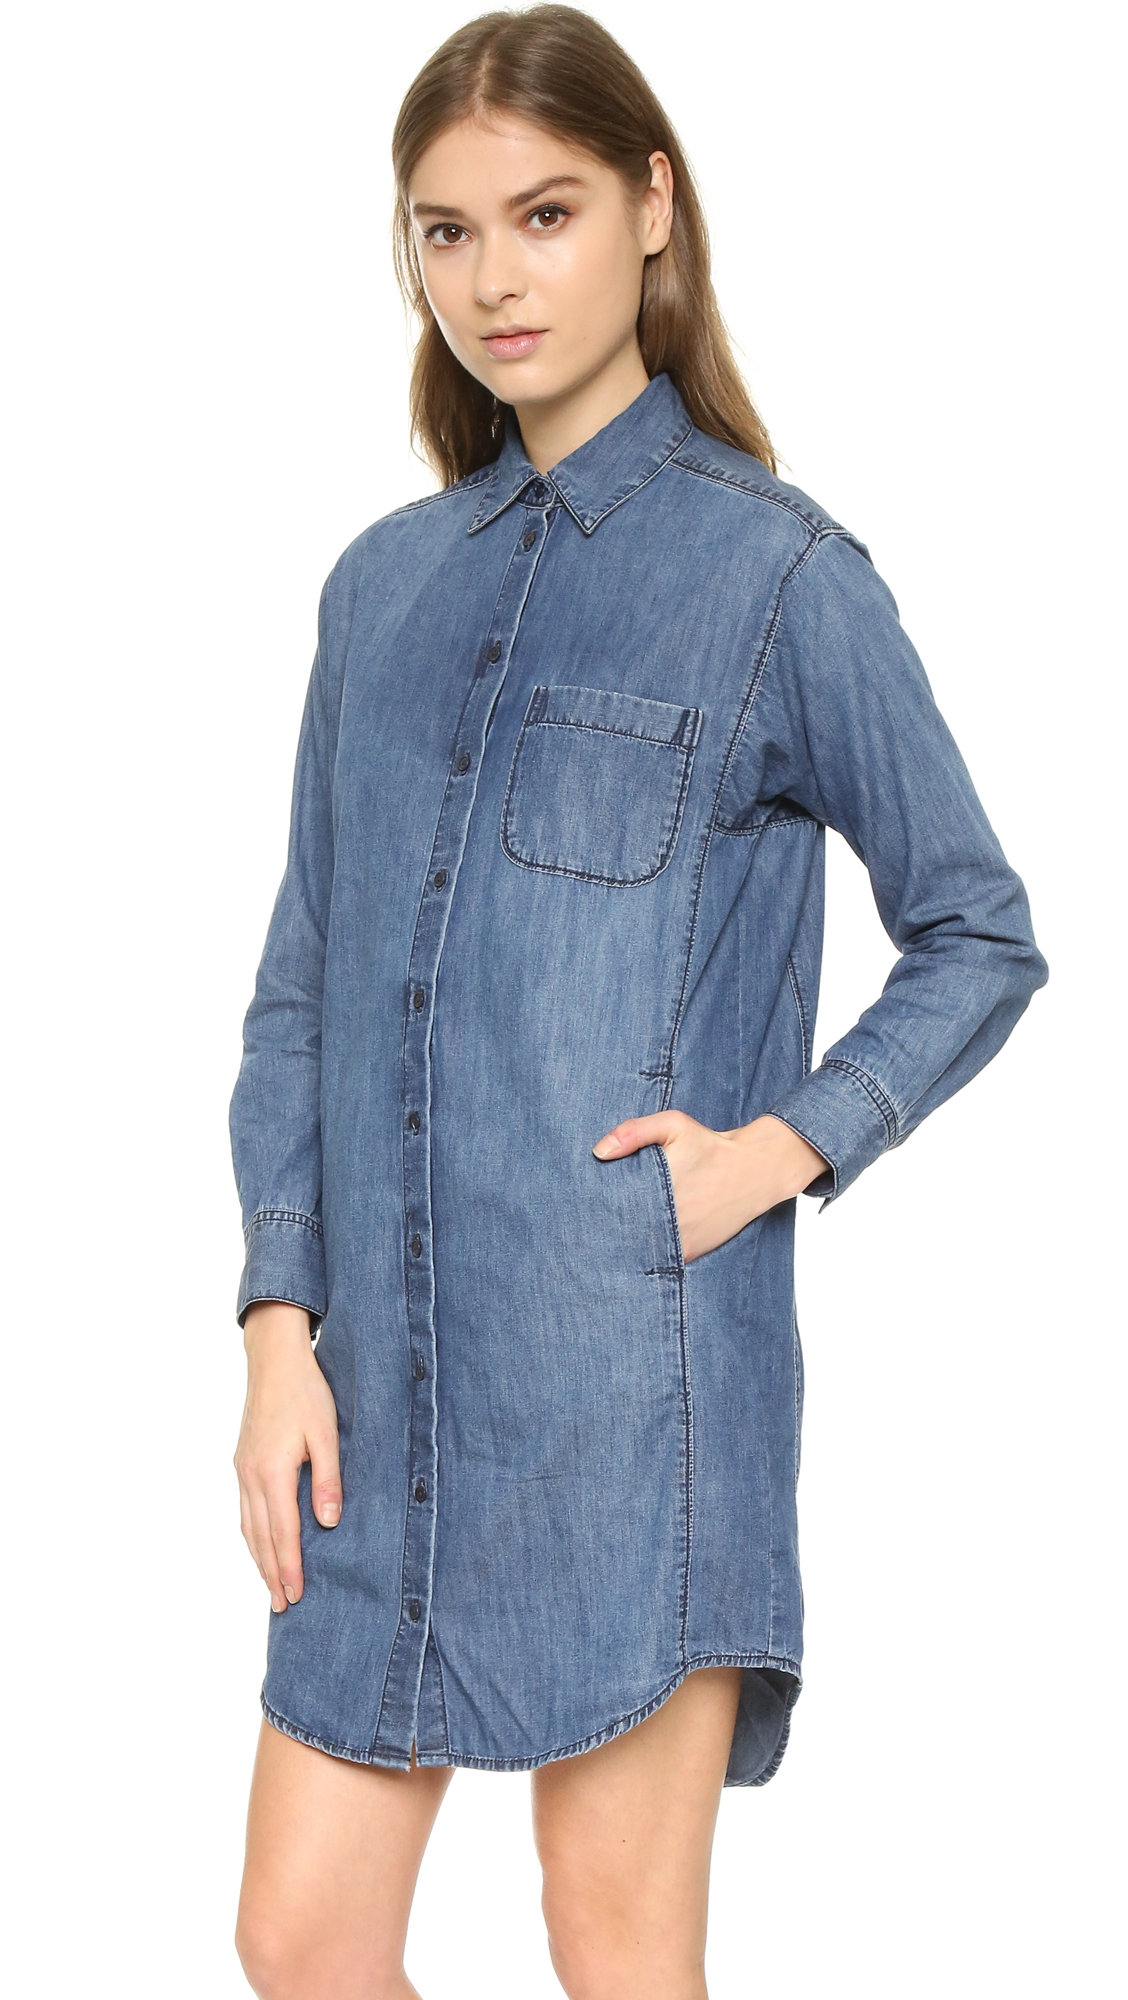 Madewell Denim Cozy Shirtdress in Chambray (Blue) - Lyst